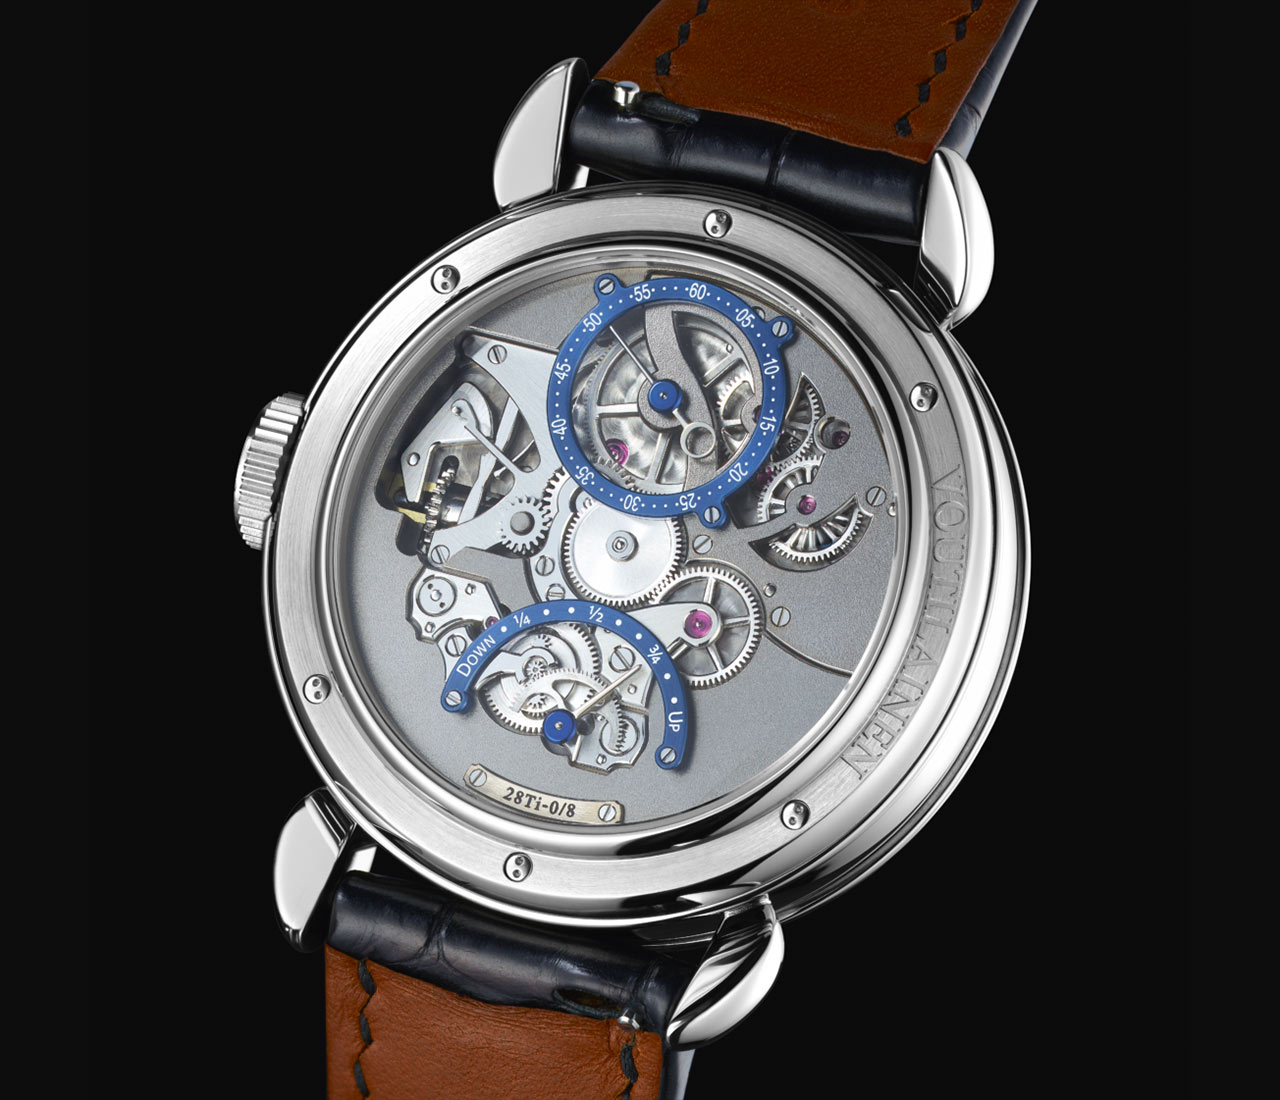 Voutilainen ‘28ti’ wristwatch, an elegant offering by Kari Voutilainen